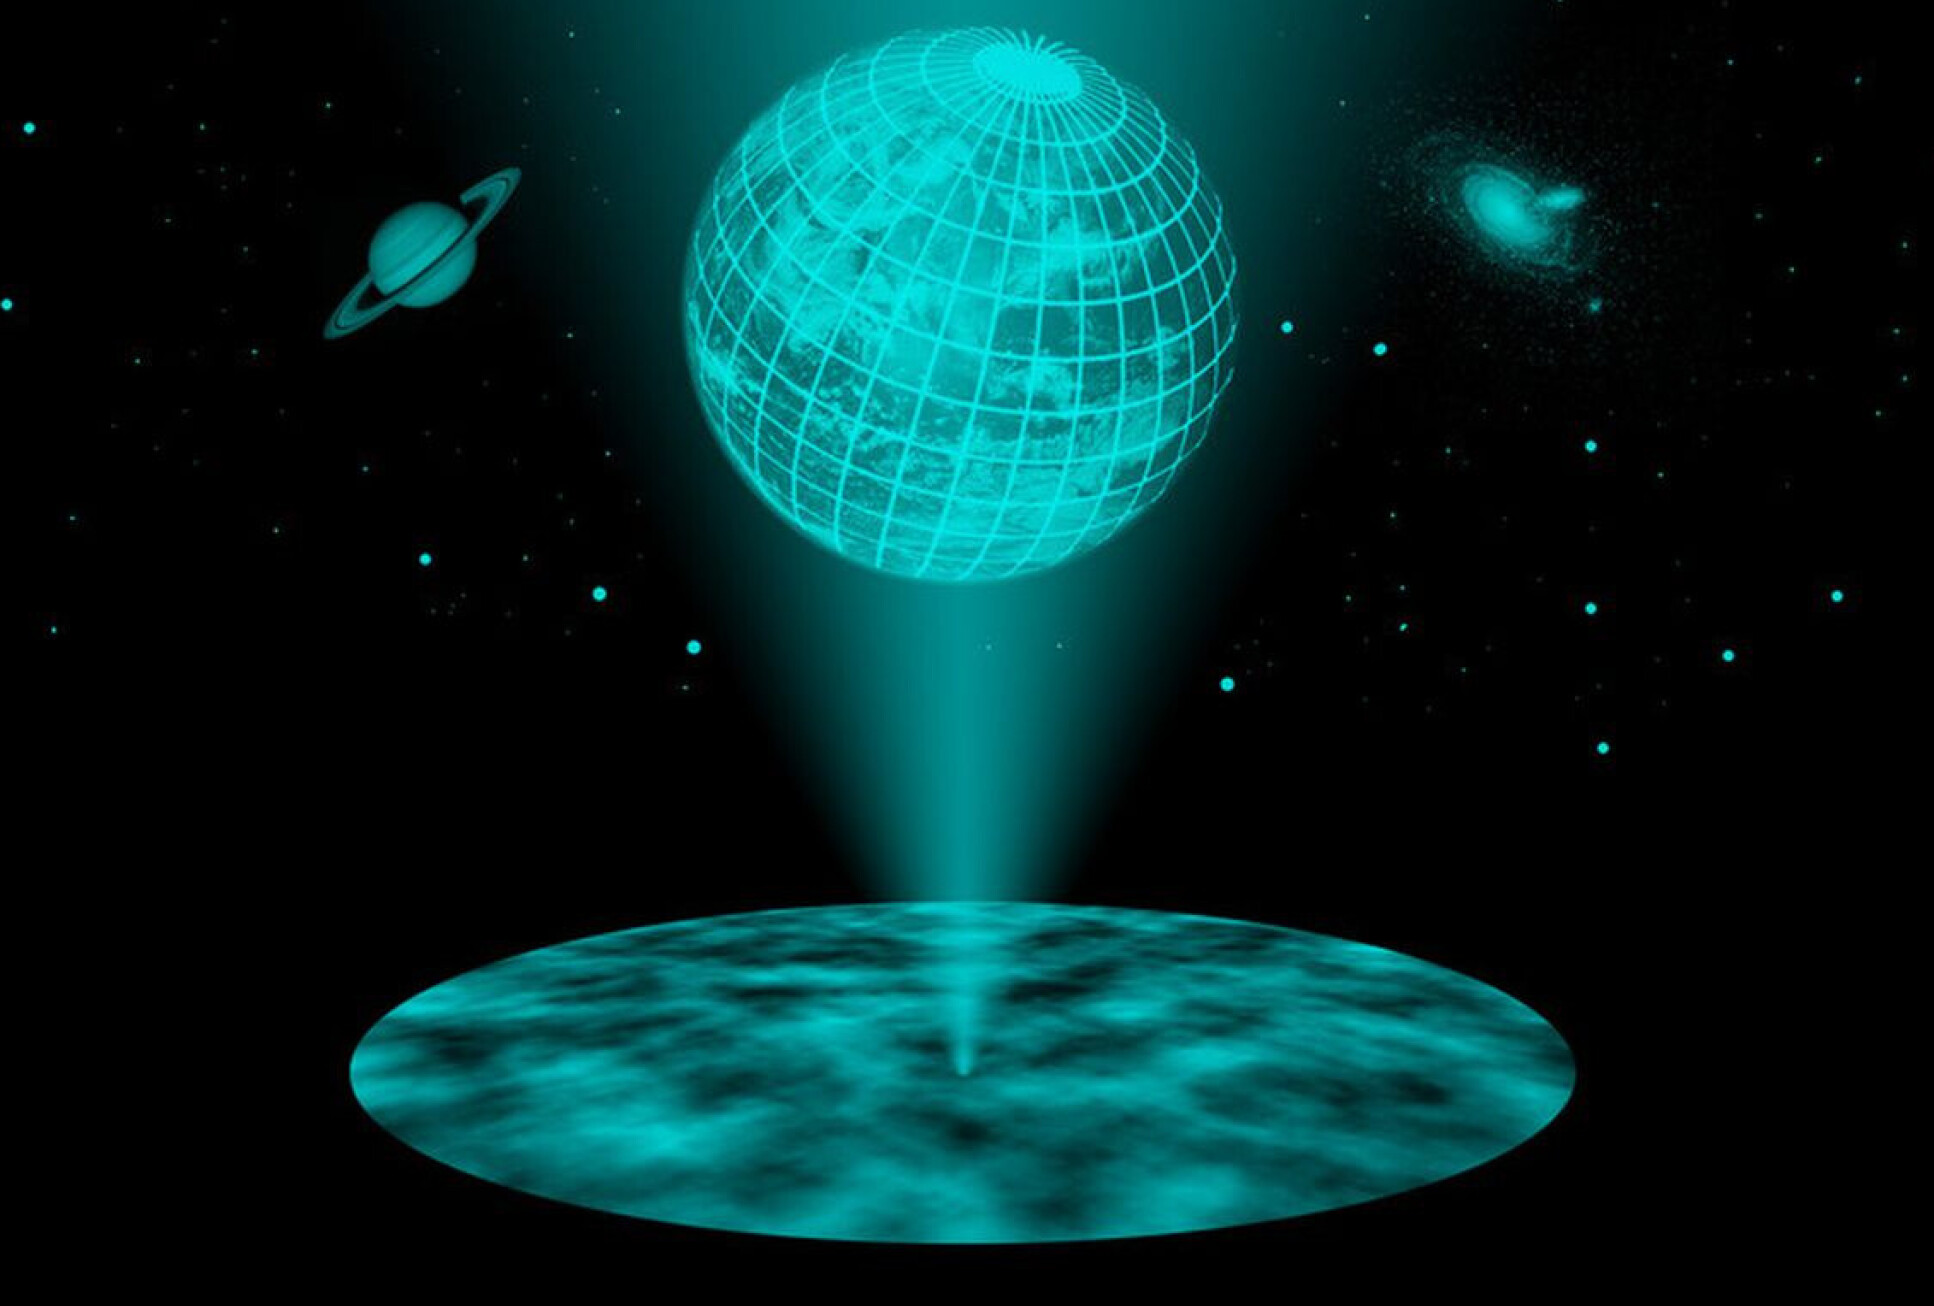 holographic principle - illustration of universe